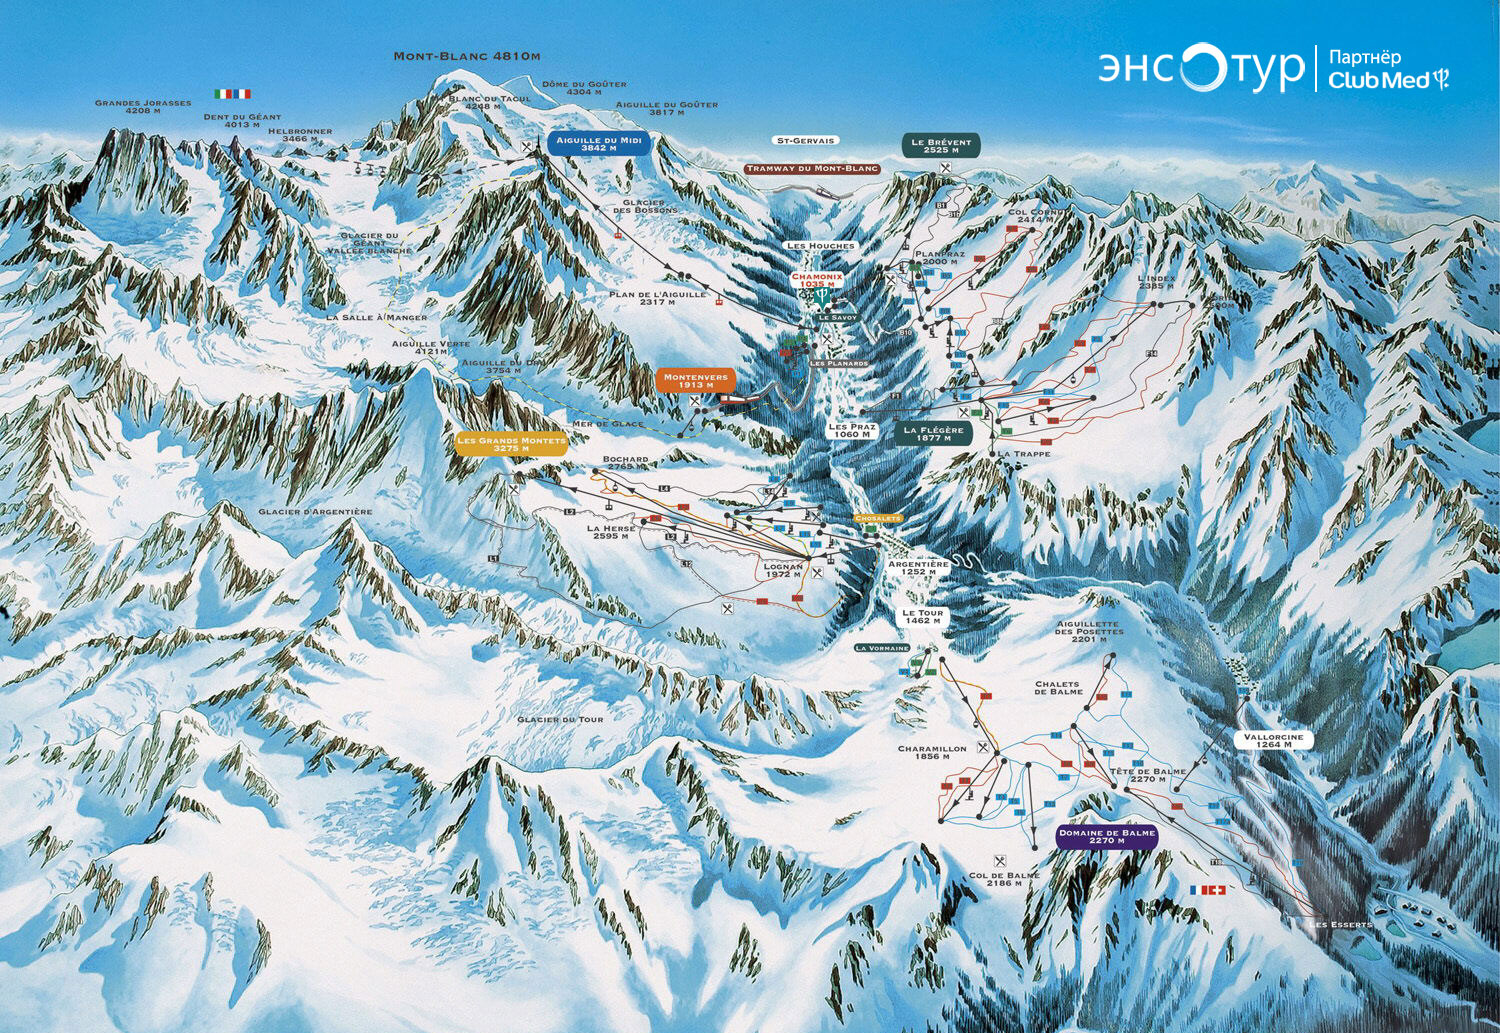 Club Med Chamonix Mont-Blanc (Шамони Монблан)